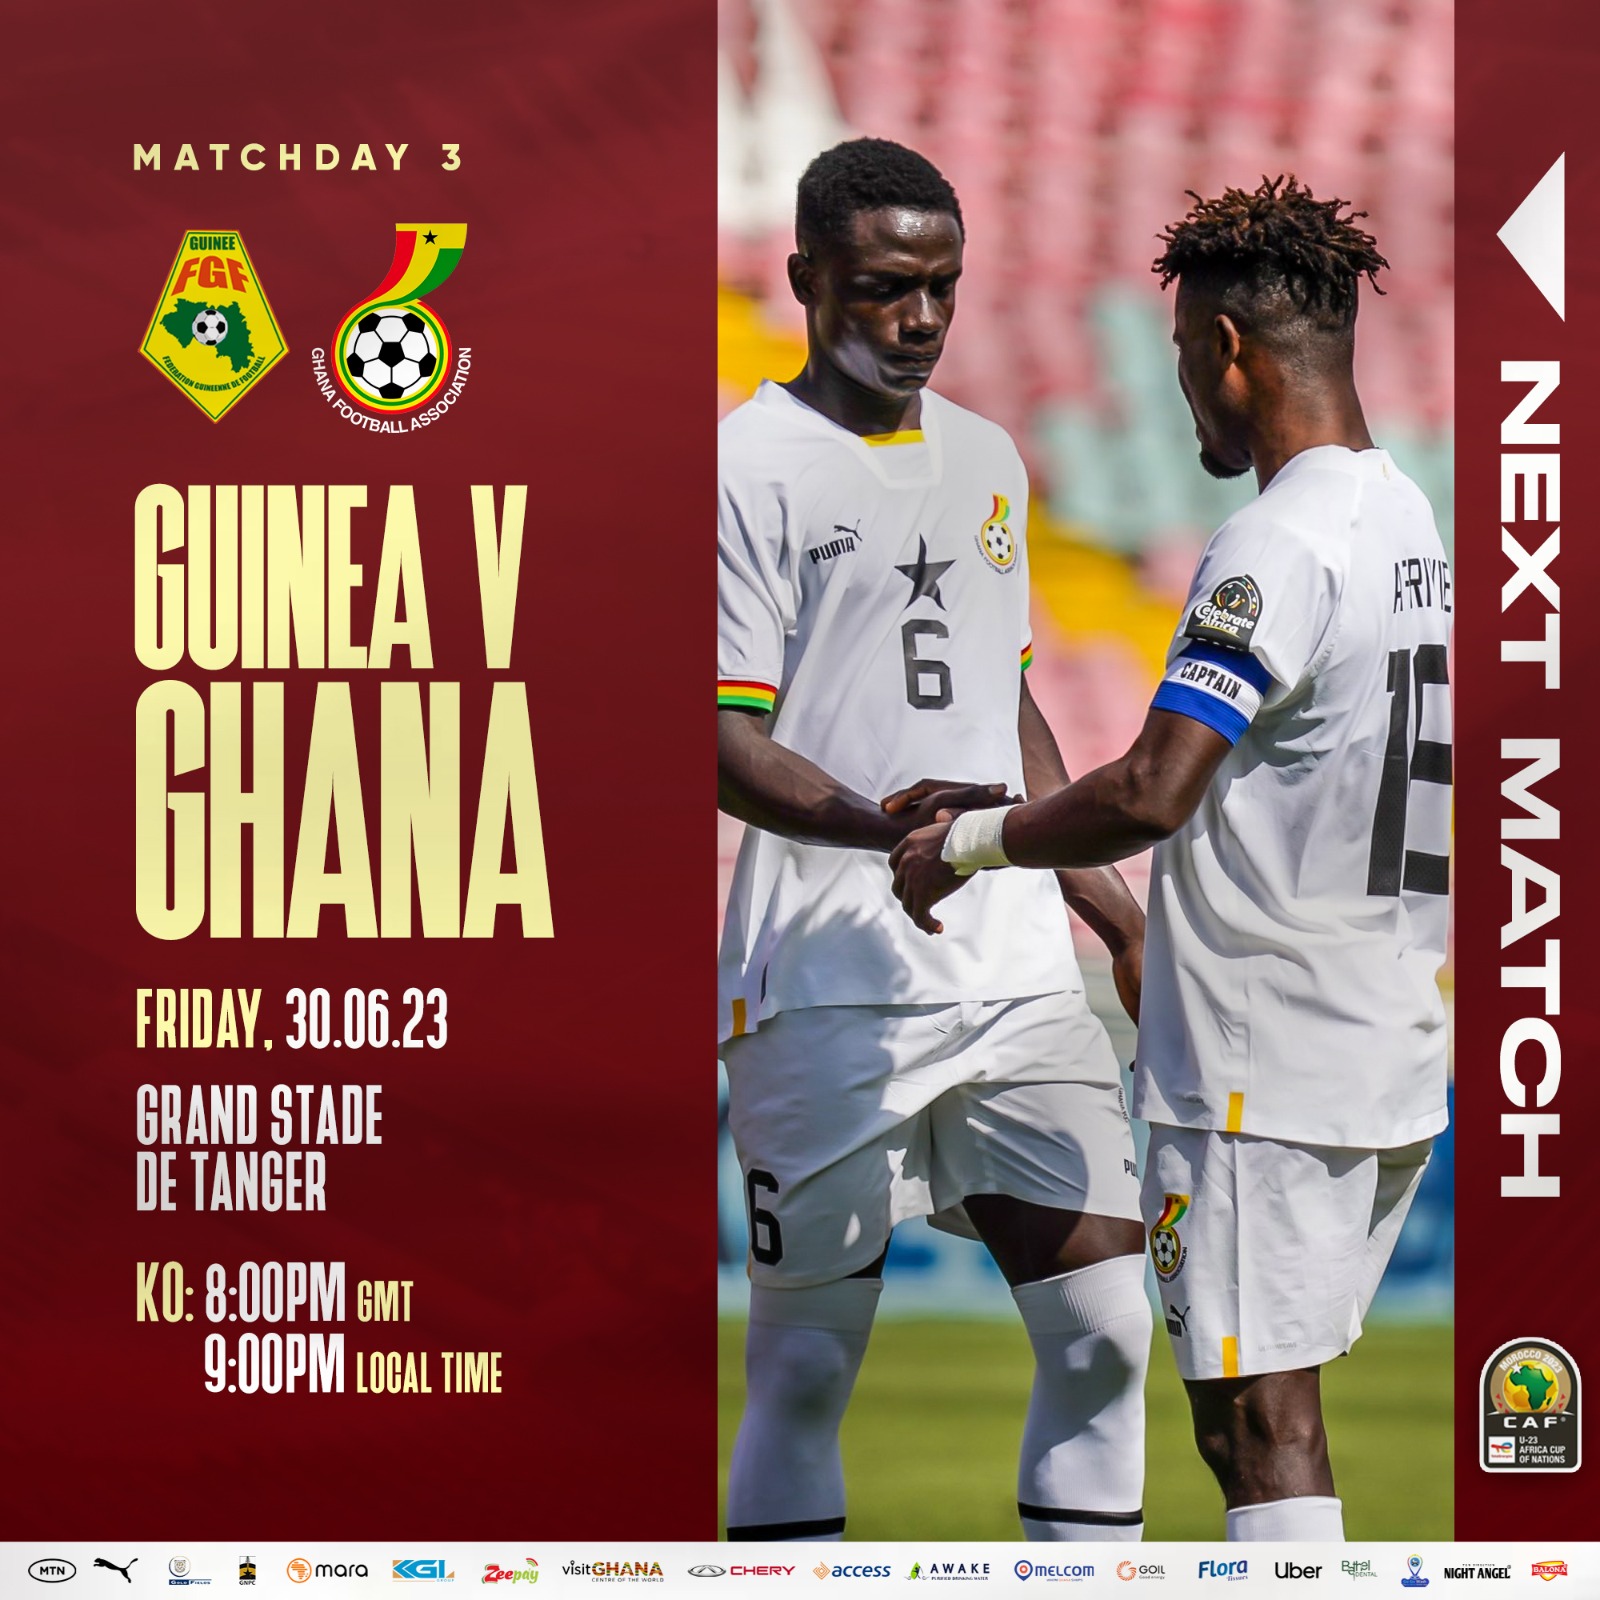 CAF announce Match Officials for Guinea vs Ghana clash